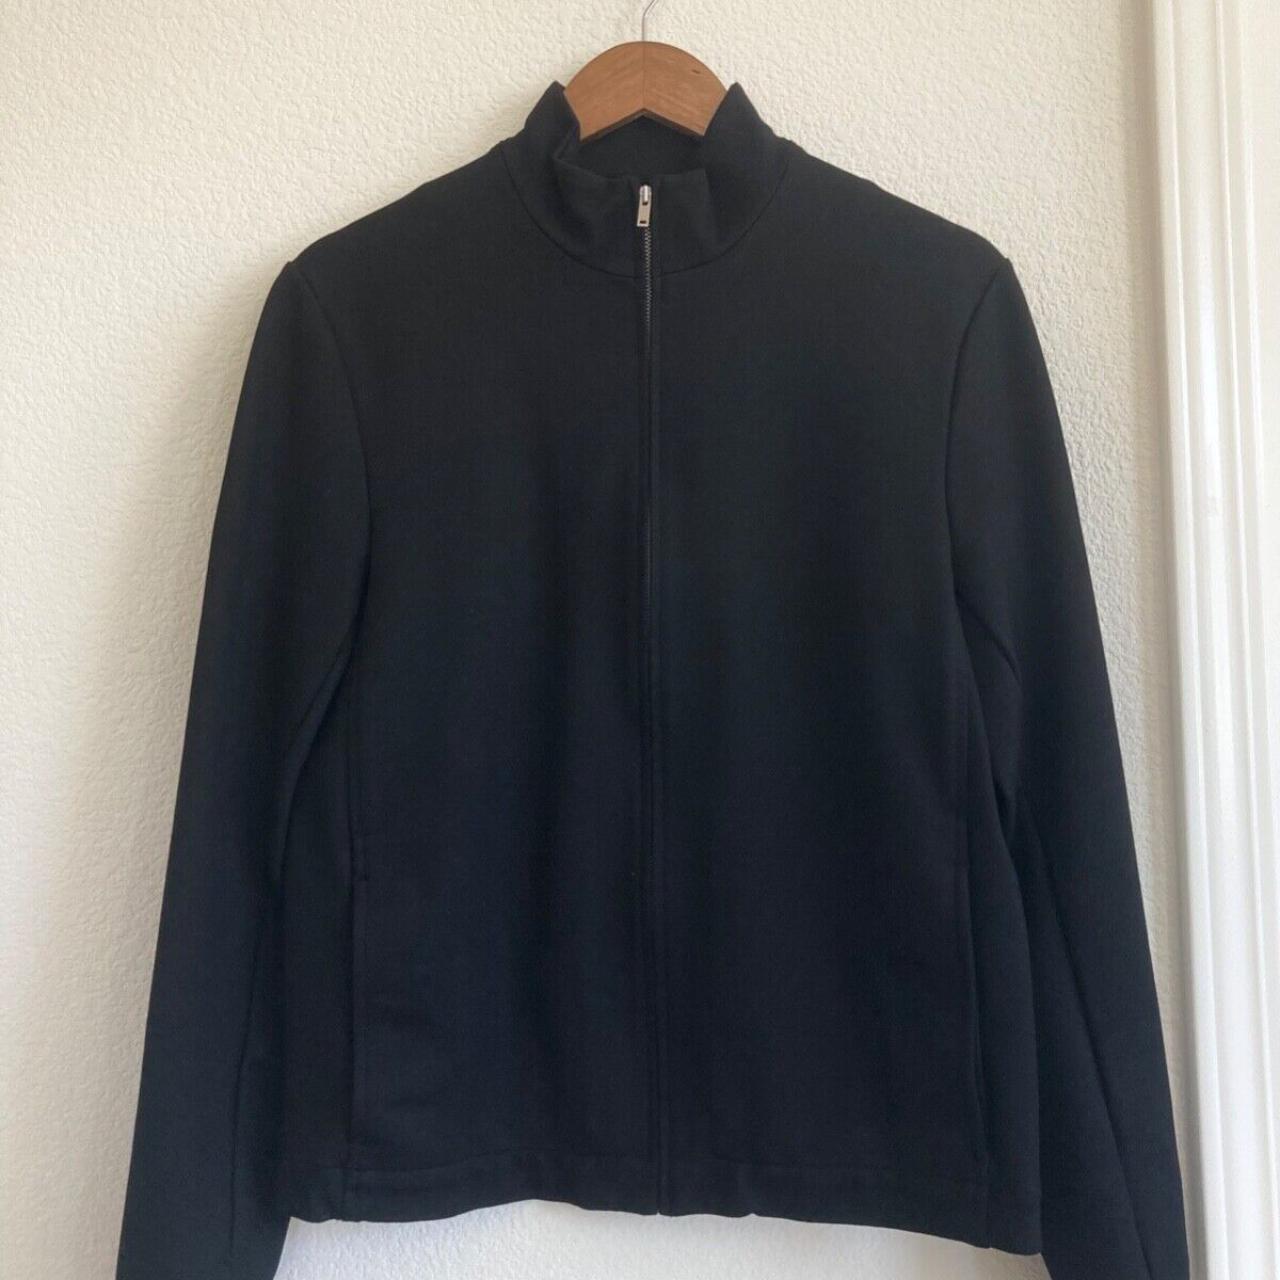 Cos Men’s jacket - Size S. Black. - Depop